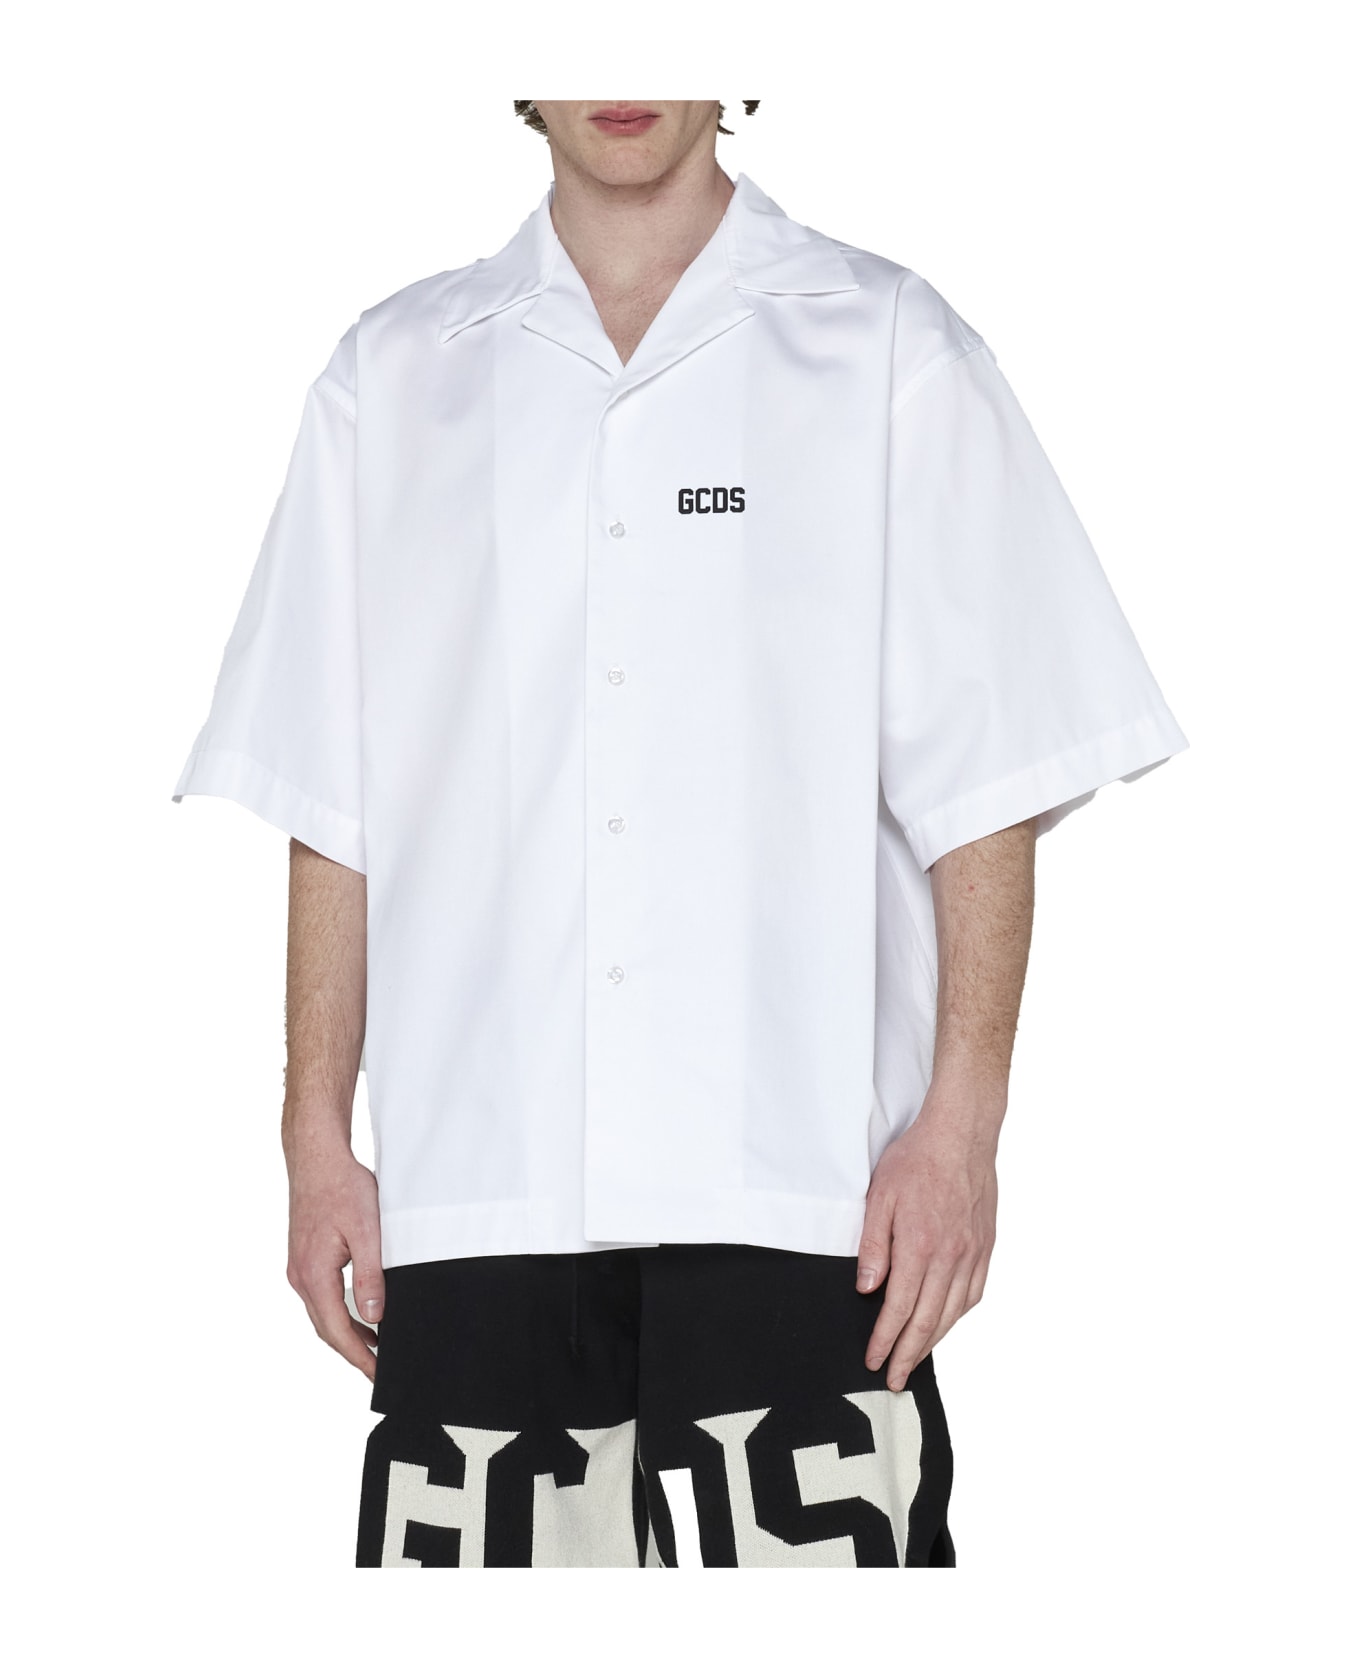 GCDS Shirt - White